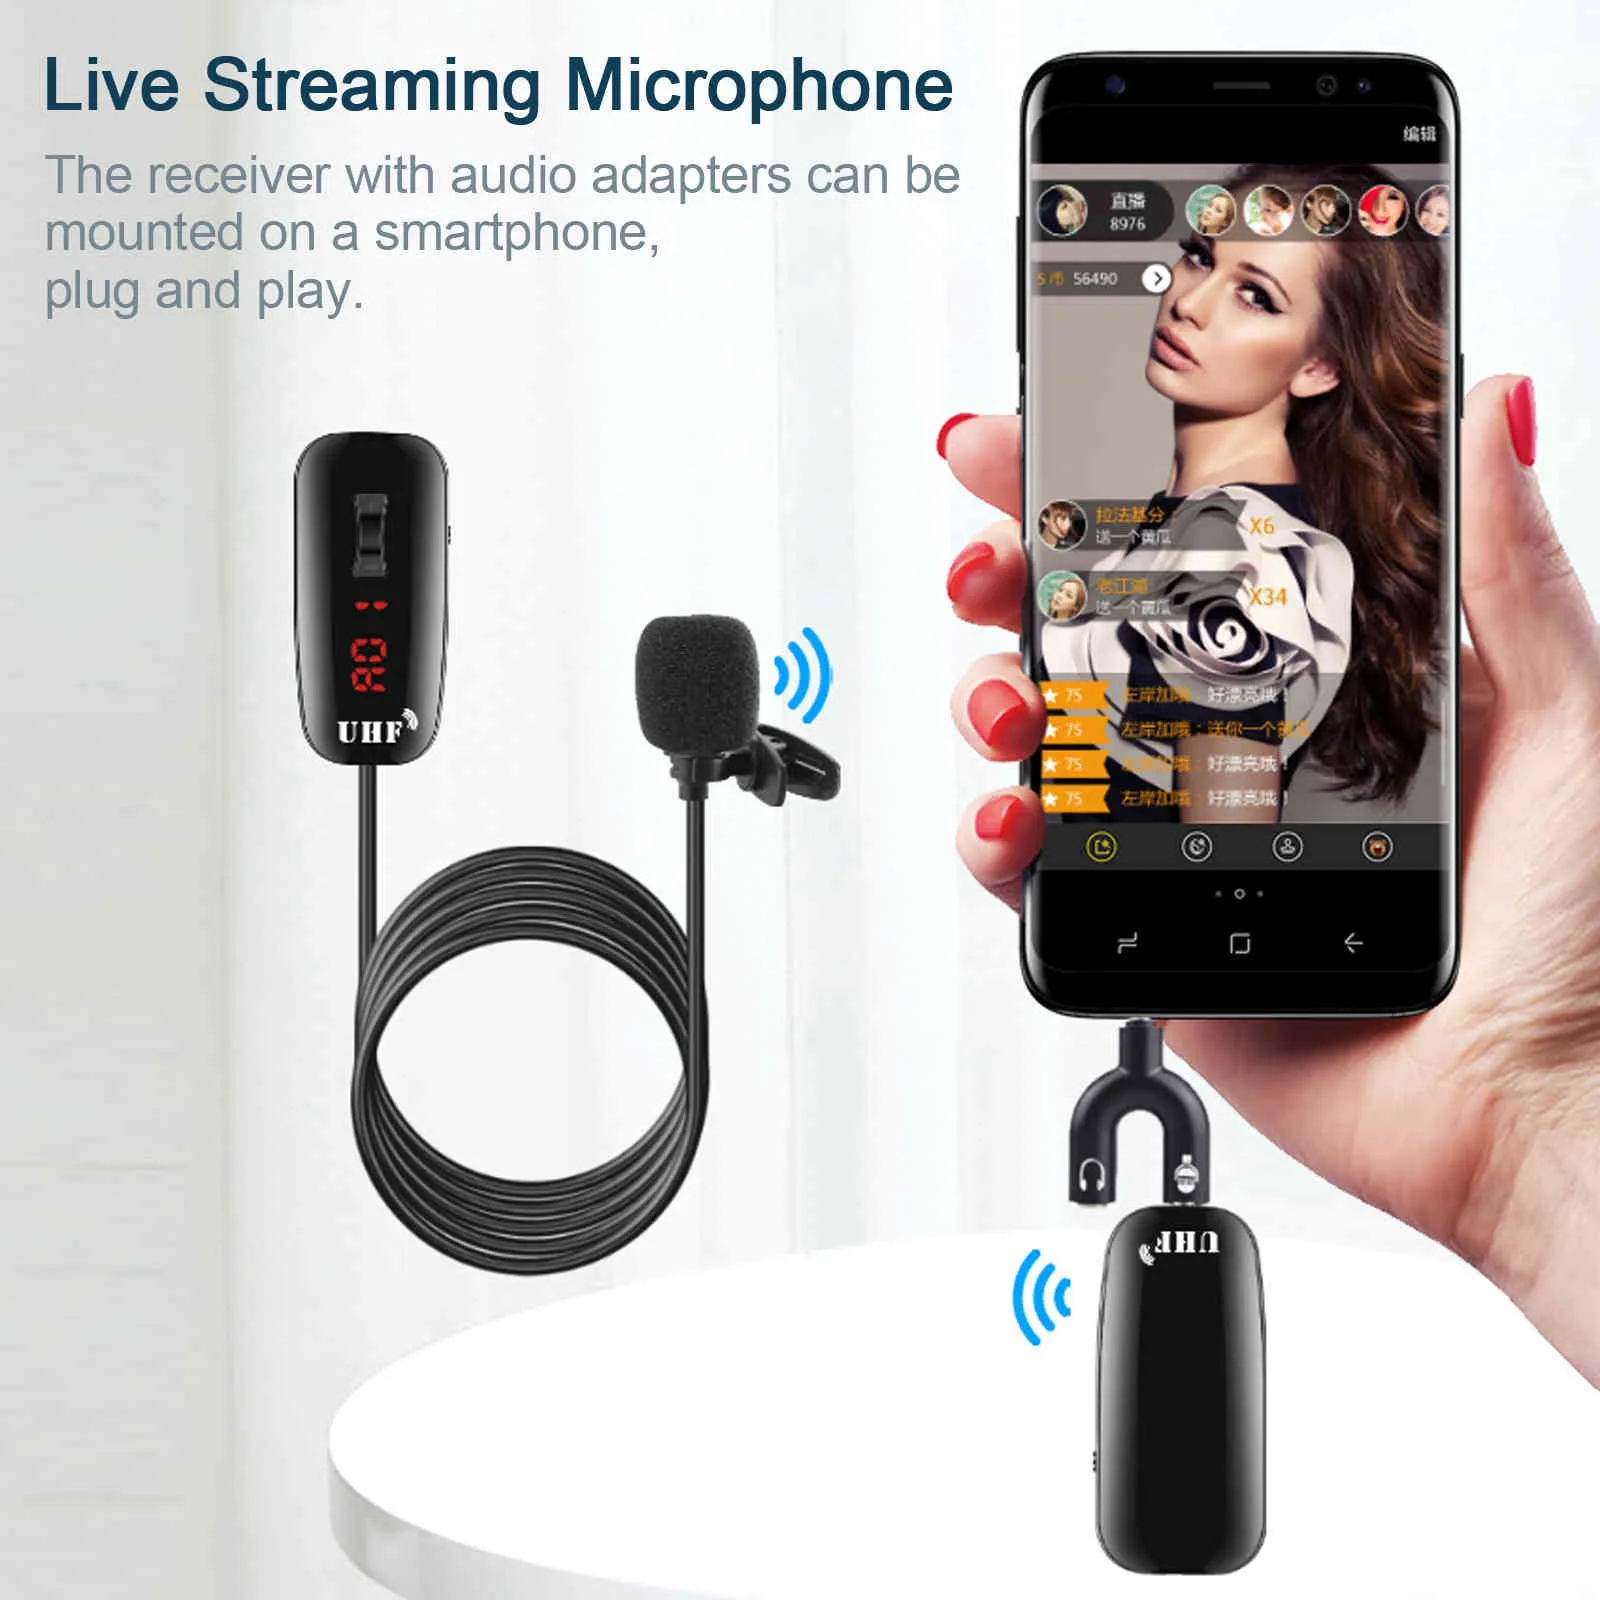 Uhf lavalier revers draadloze opname live streaming microfoon zender ontvanger 50m camcorder telefoon laptop